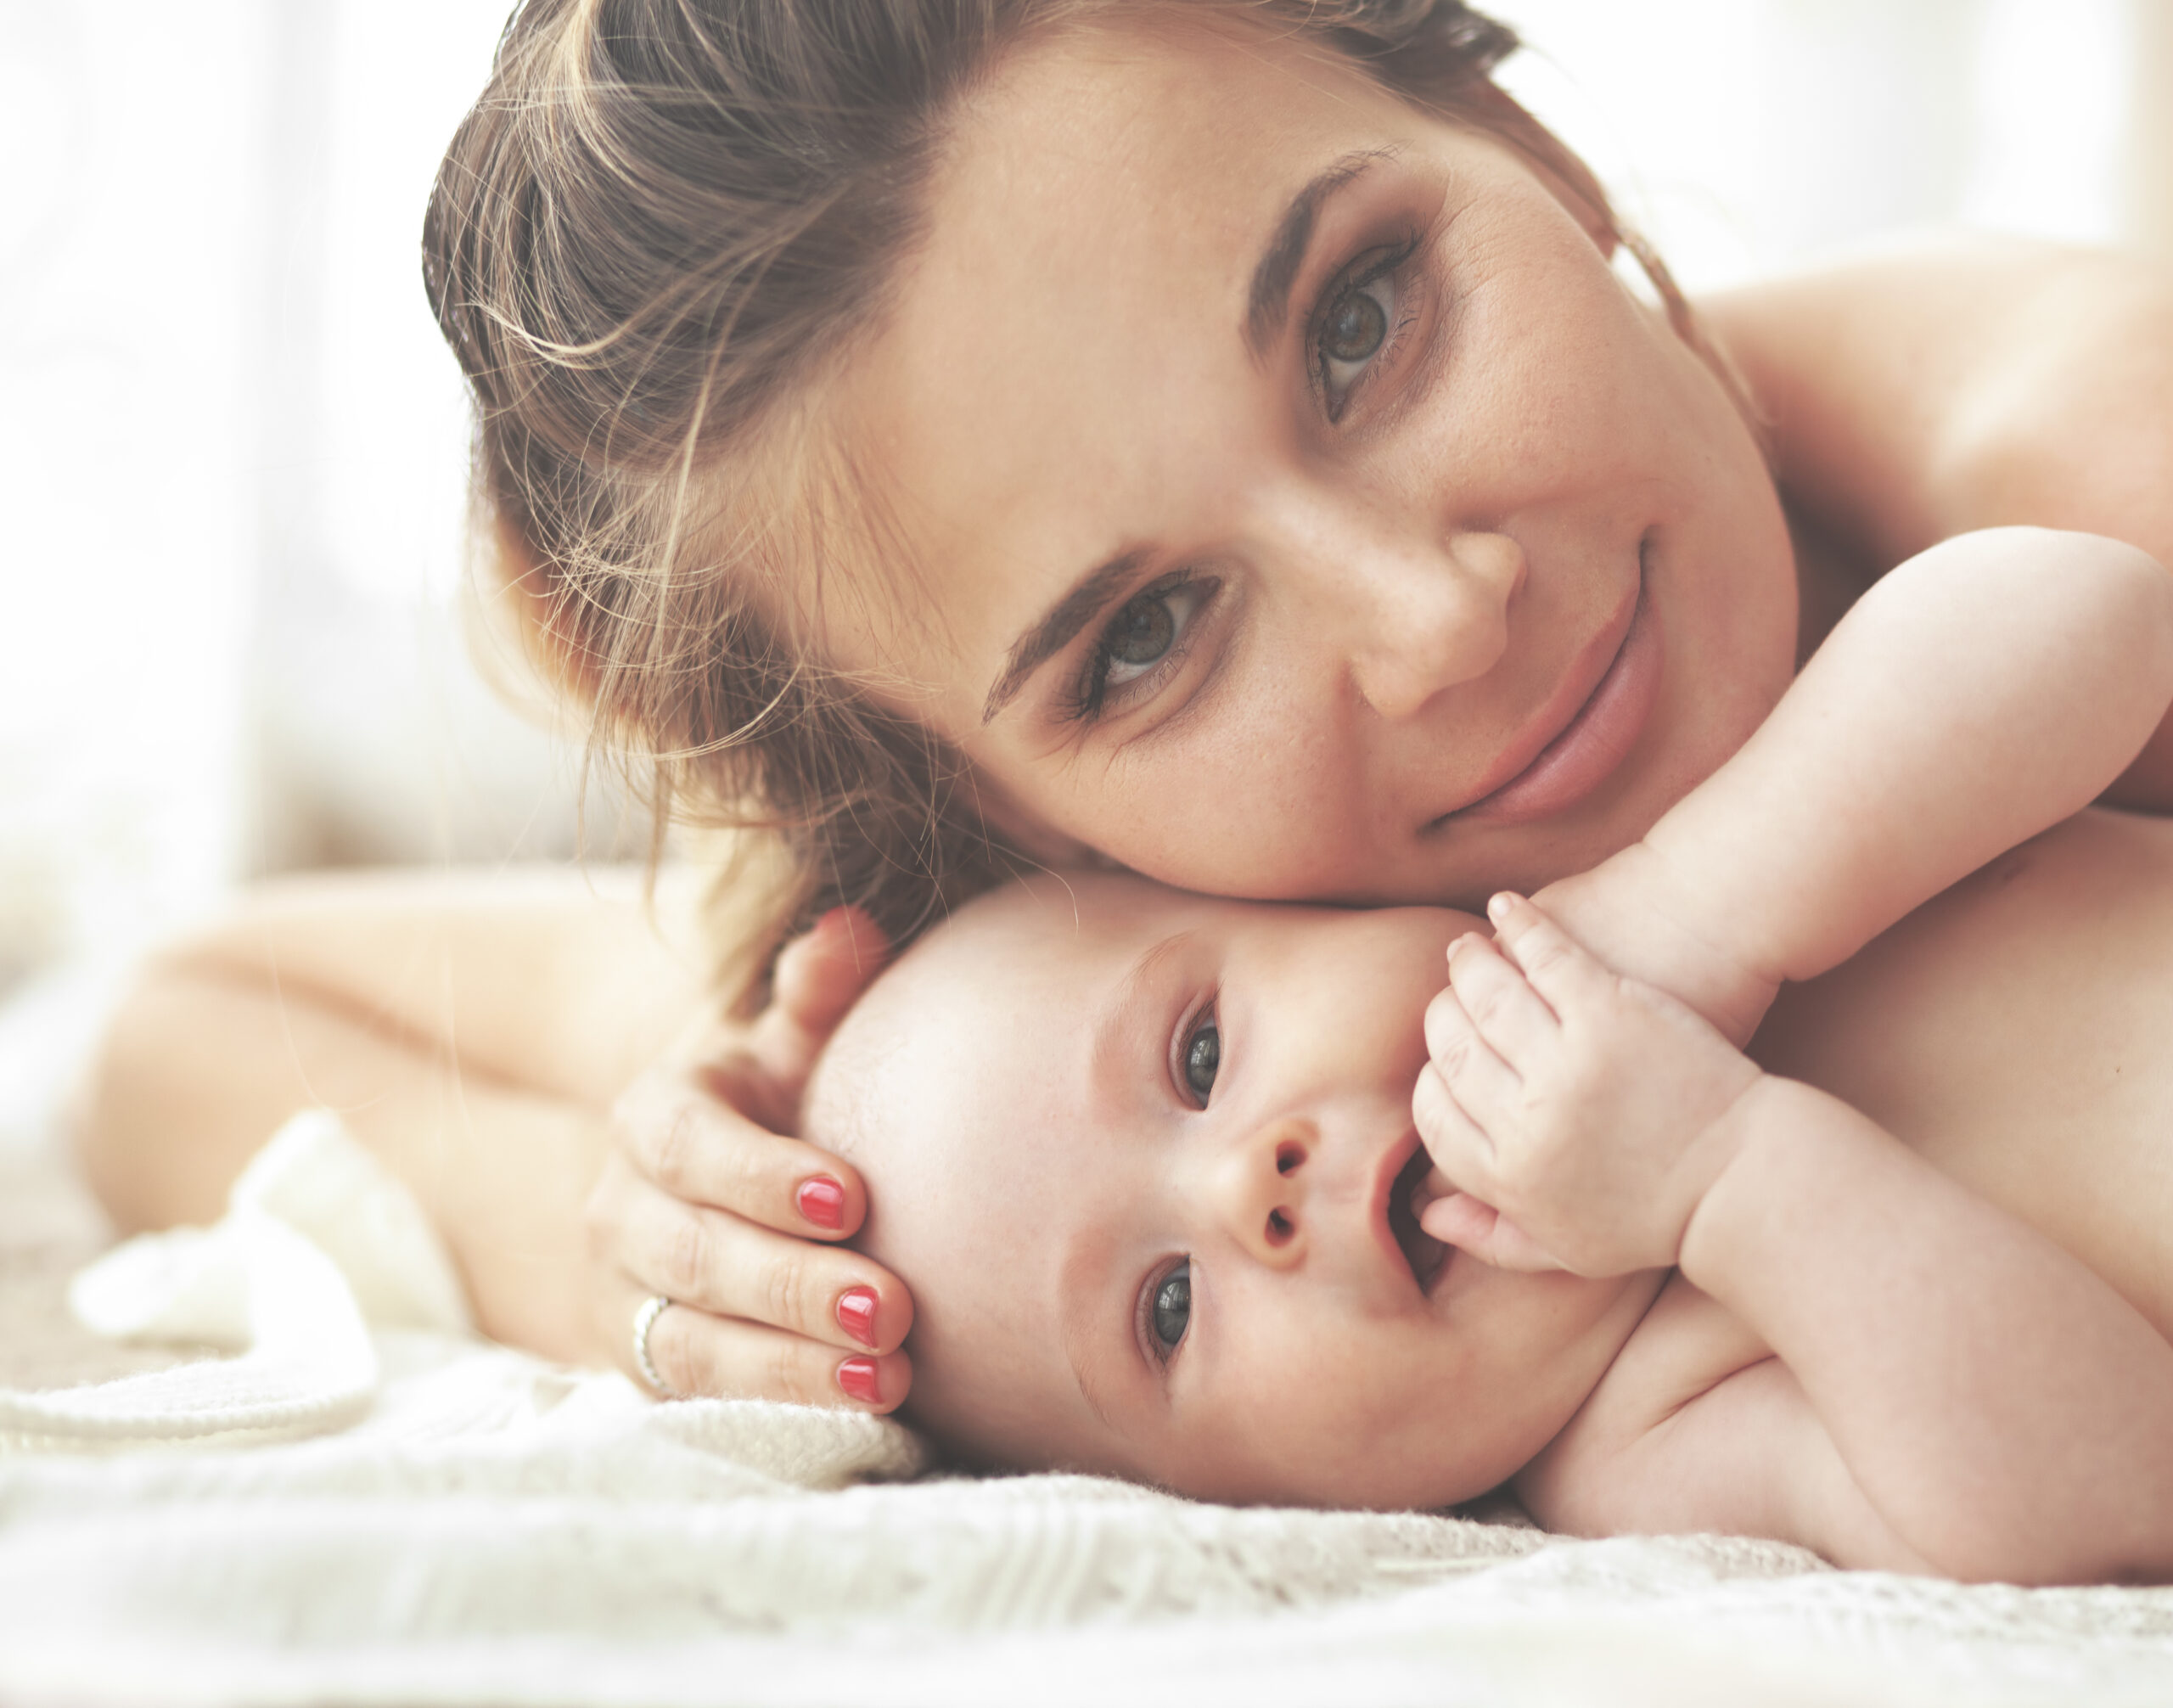 Mother and baby after birth Postnatal Depression or normal adjustment